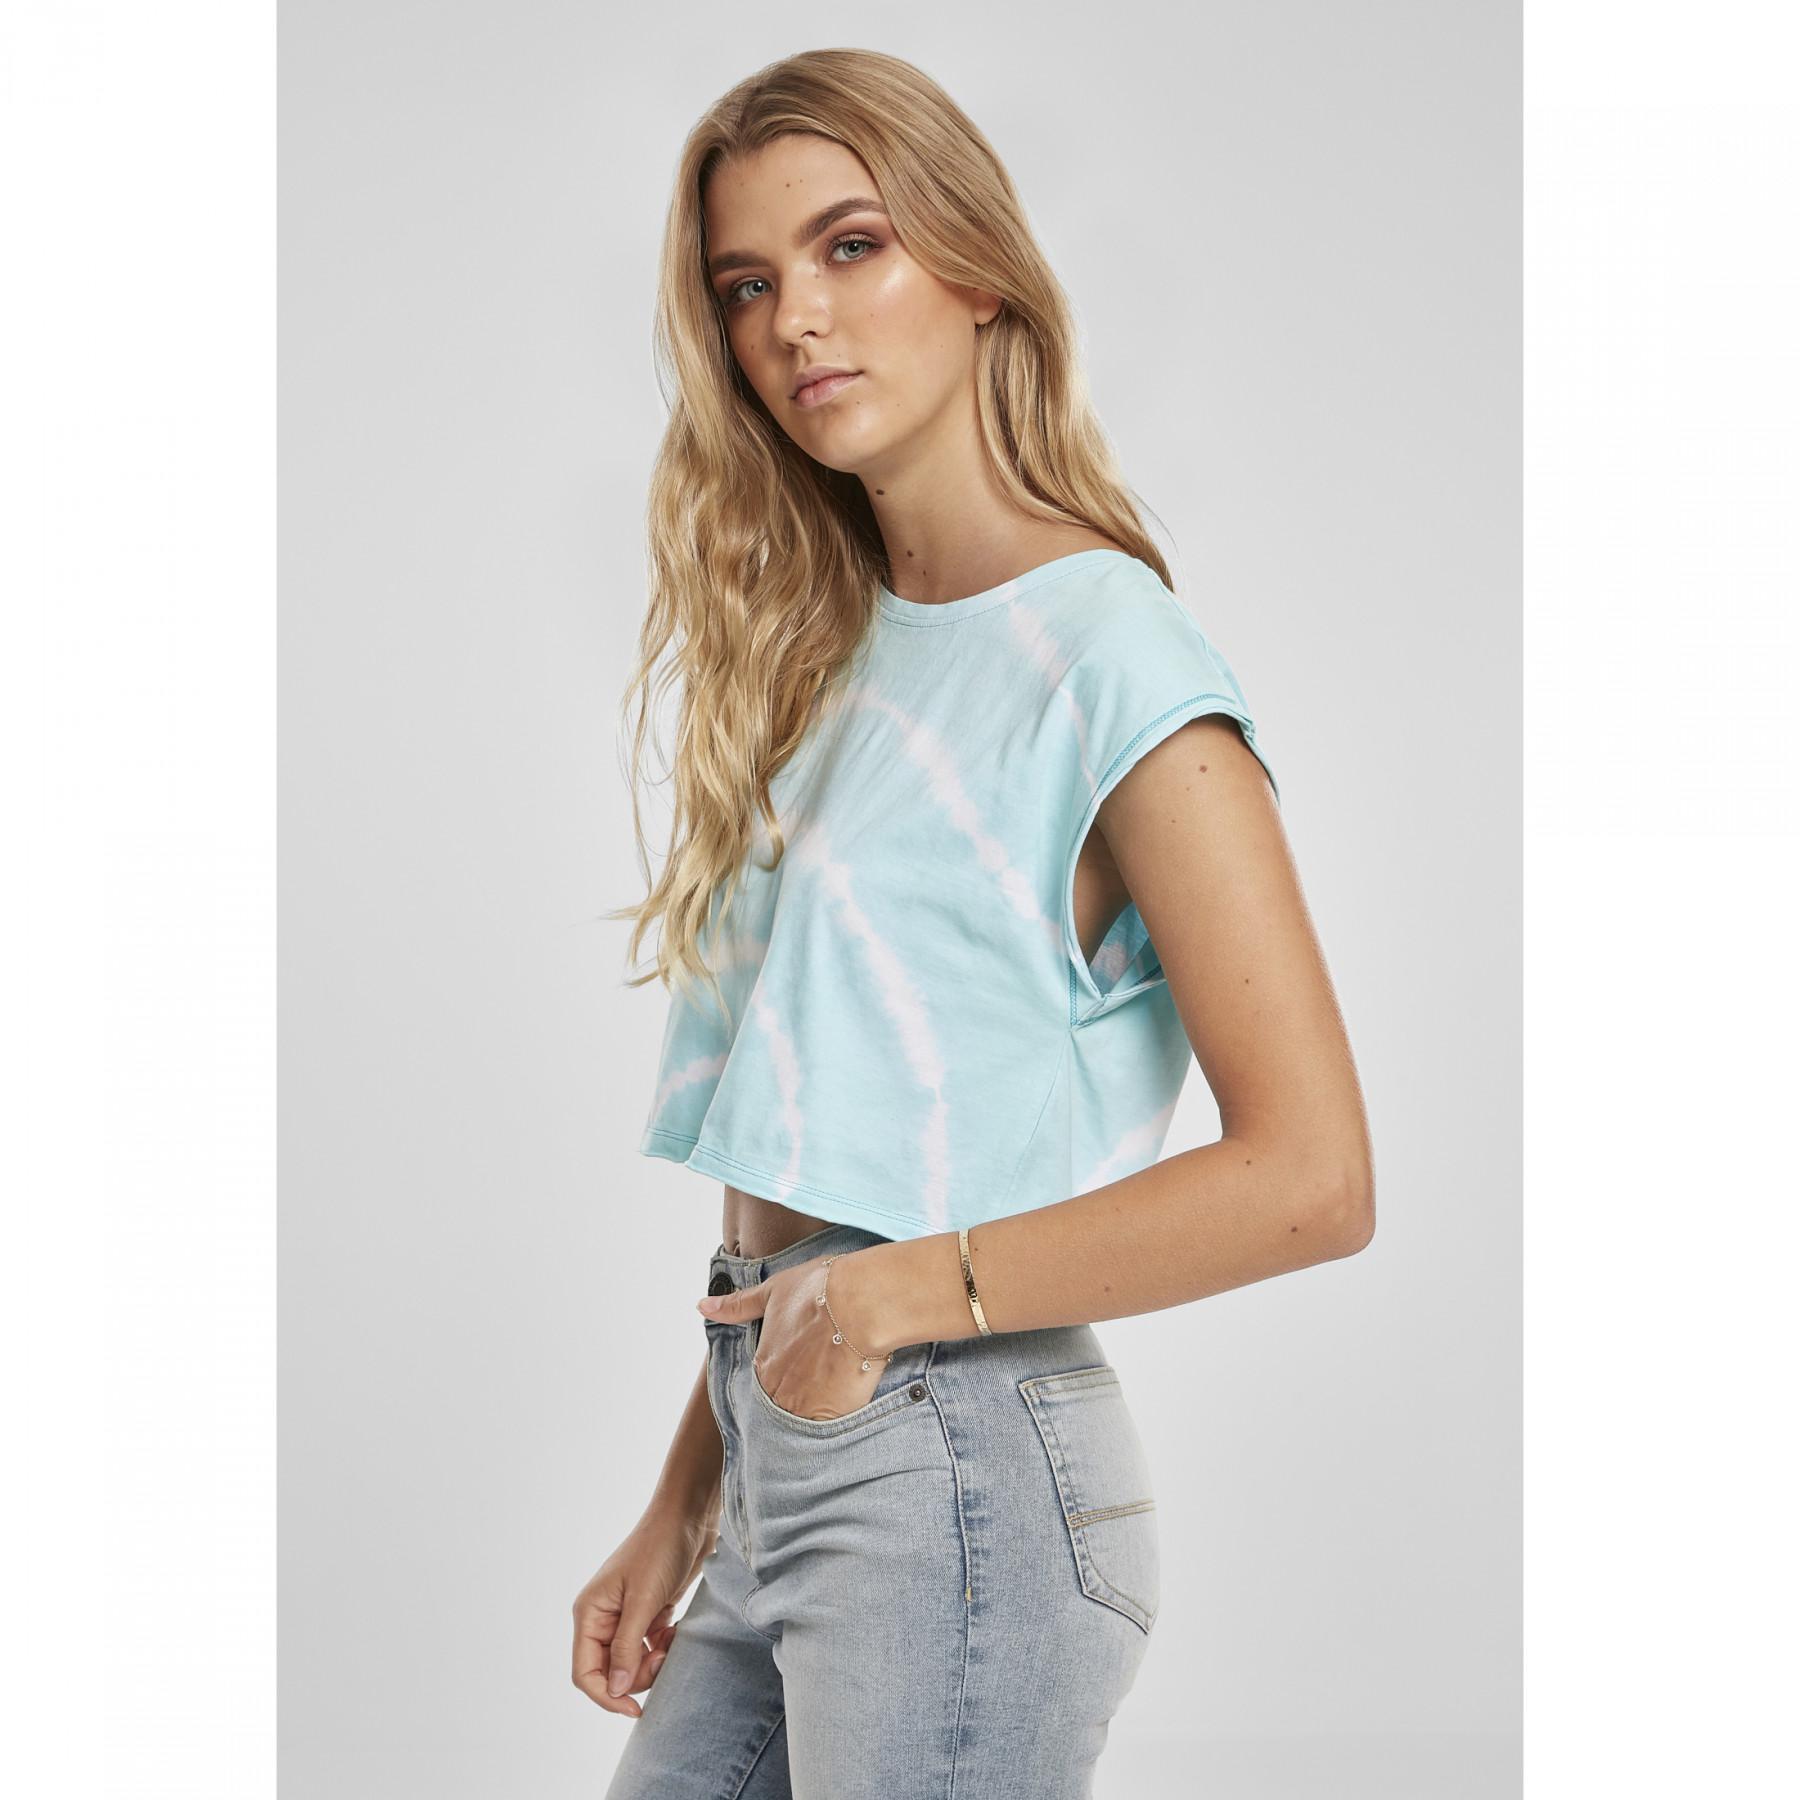 Lifestyle Urban - dye short and Women\'s tops - T-shirts tank - Woman T-shirt tie Classics